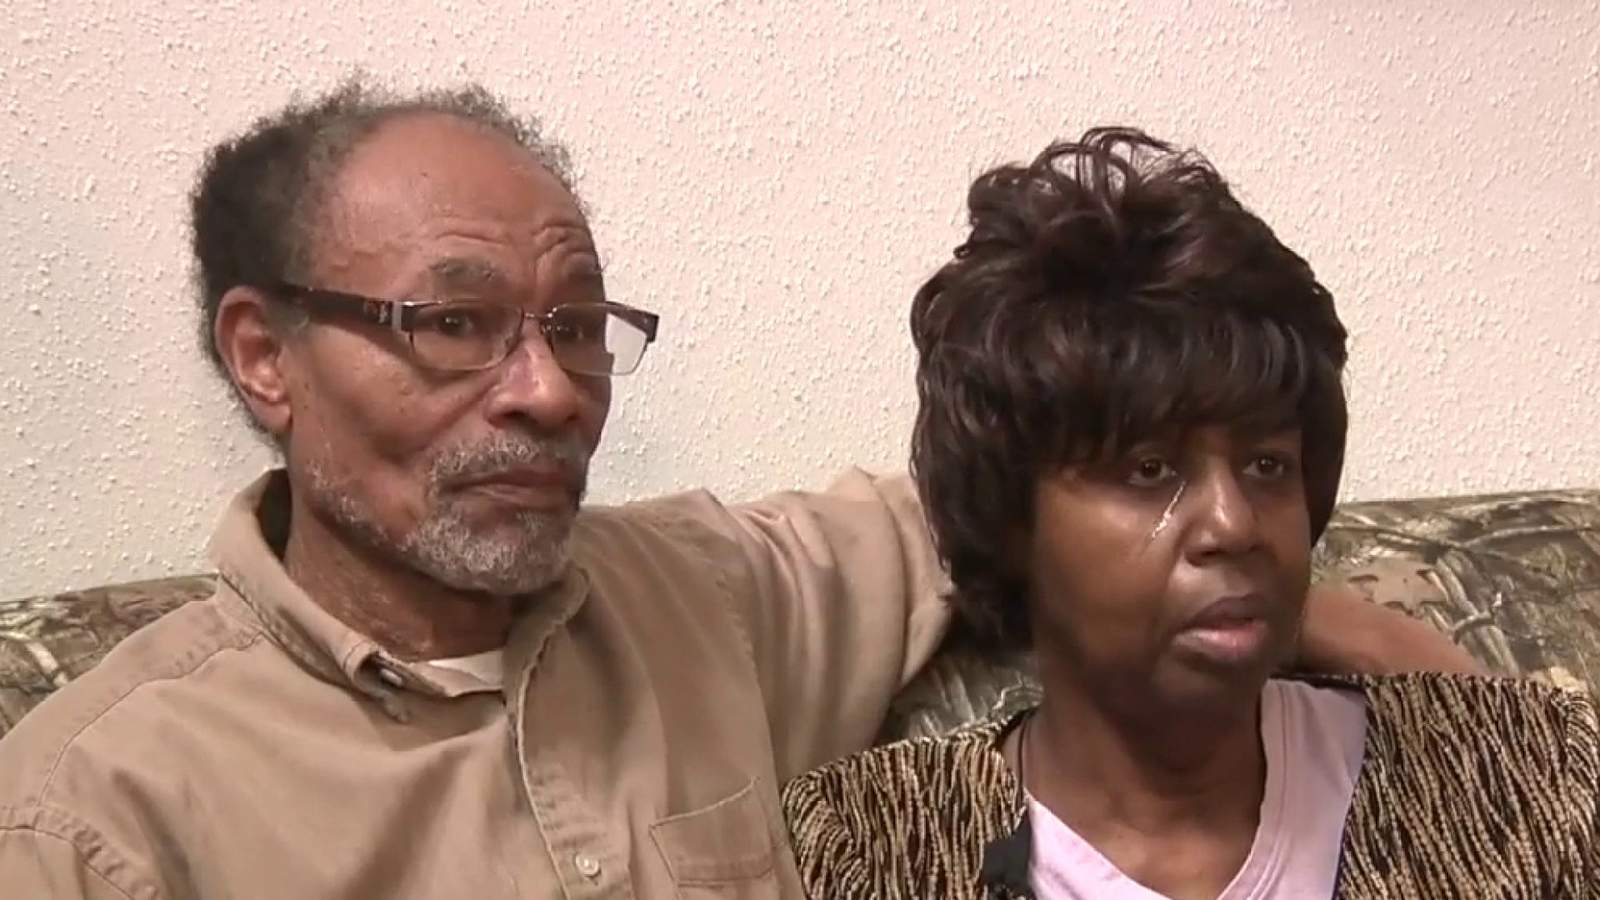 Parents of man gunned down on East Side seek justice, forgive killer